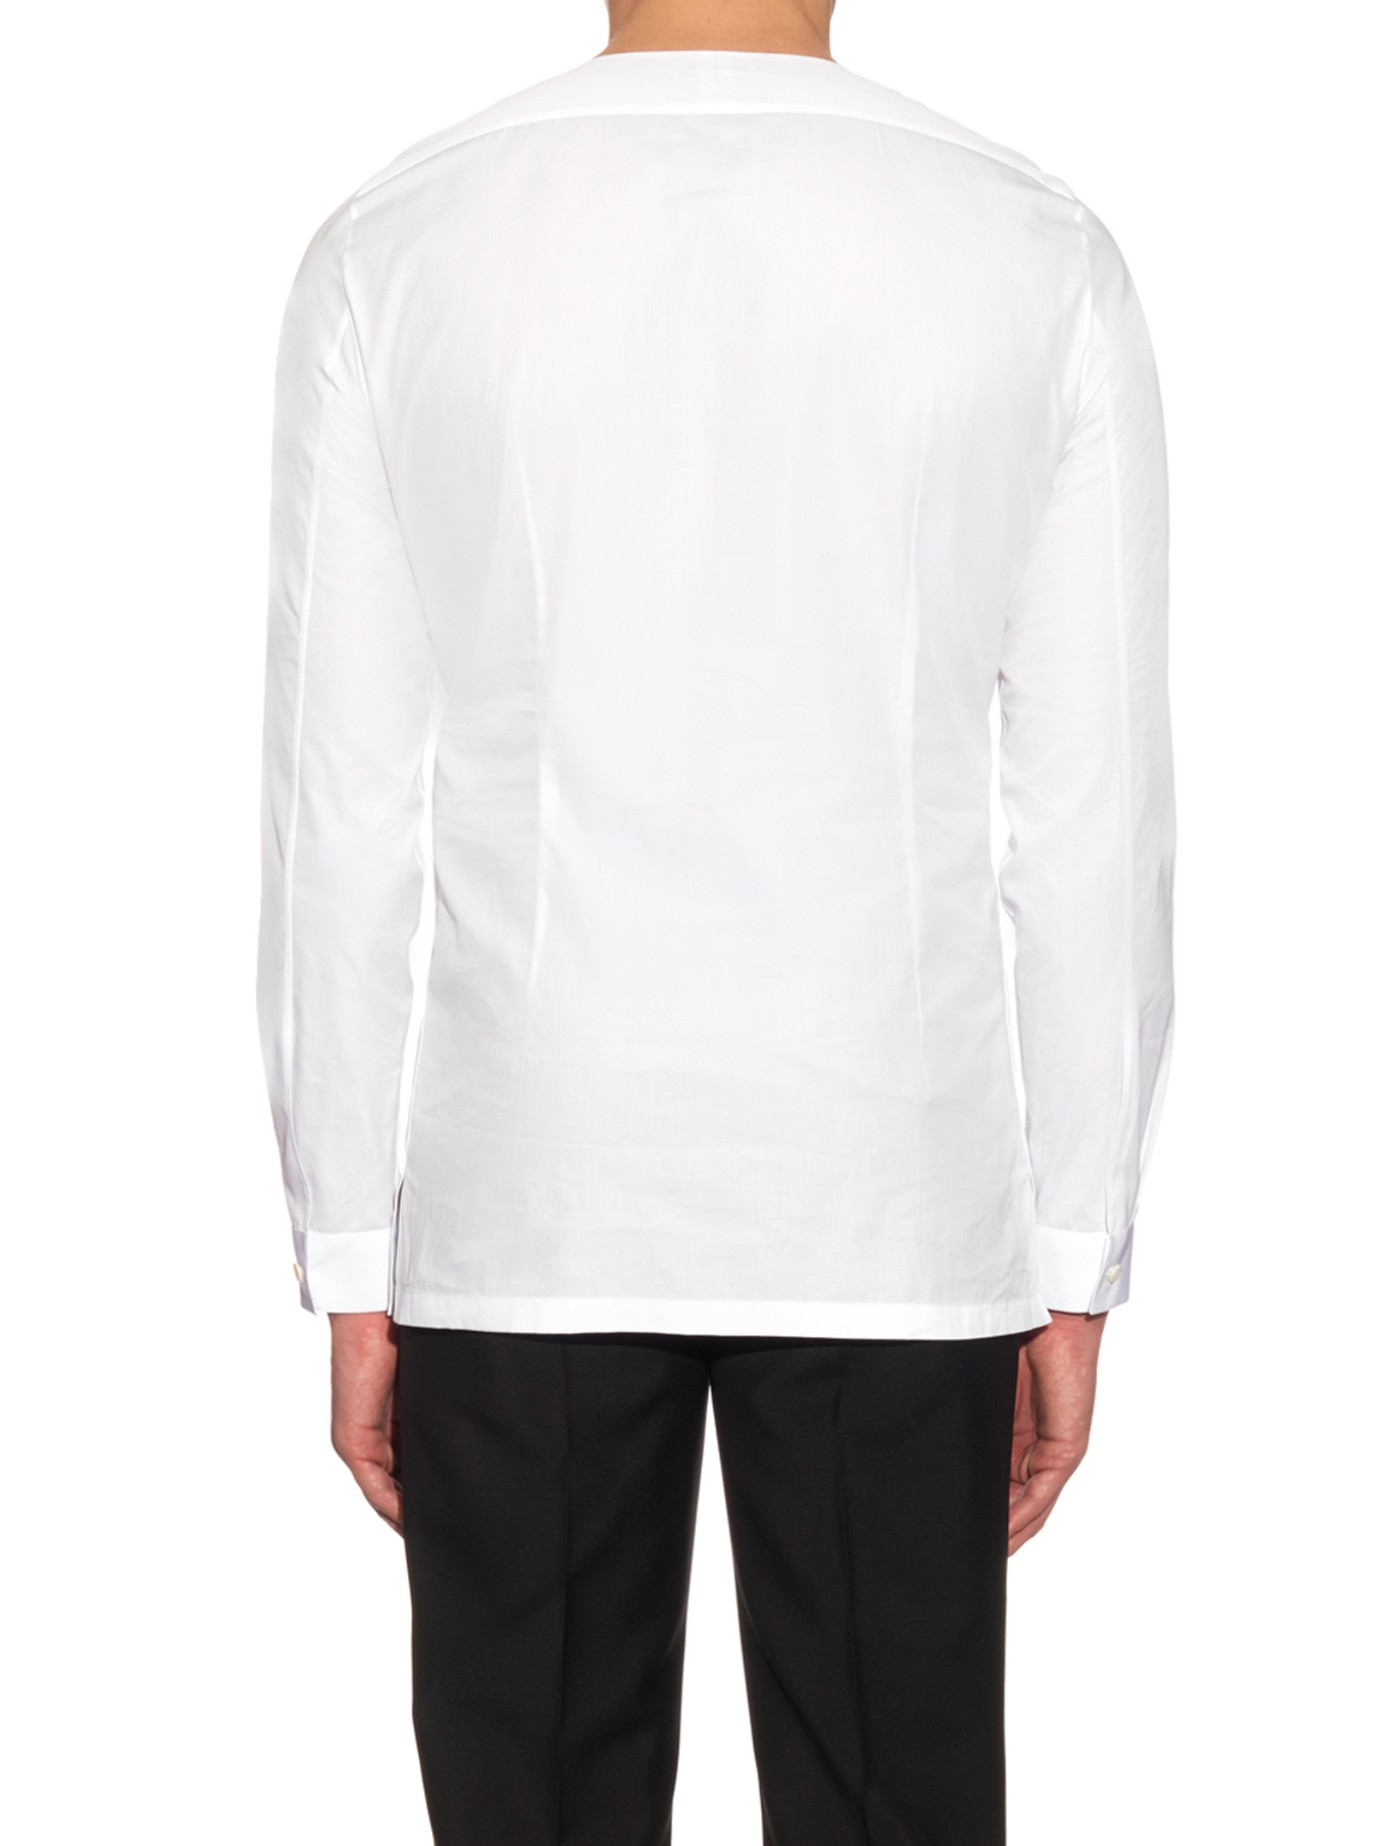 Lyst - Balenciaga Collarless Long-sleeved Shirt in White for Men